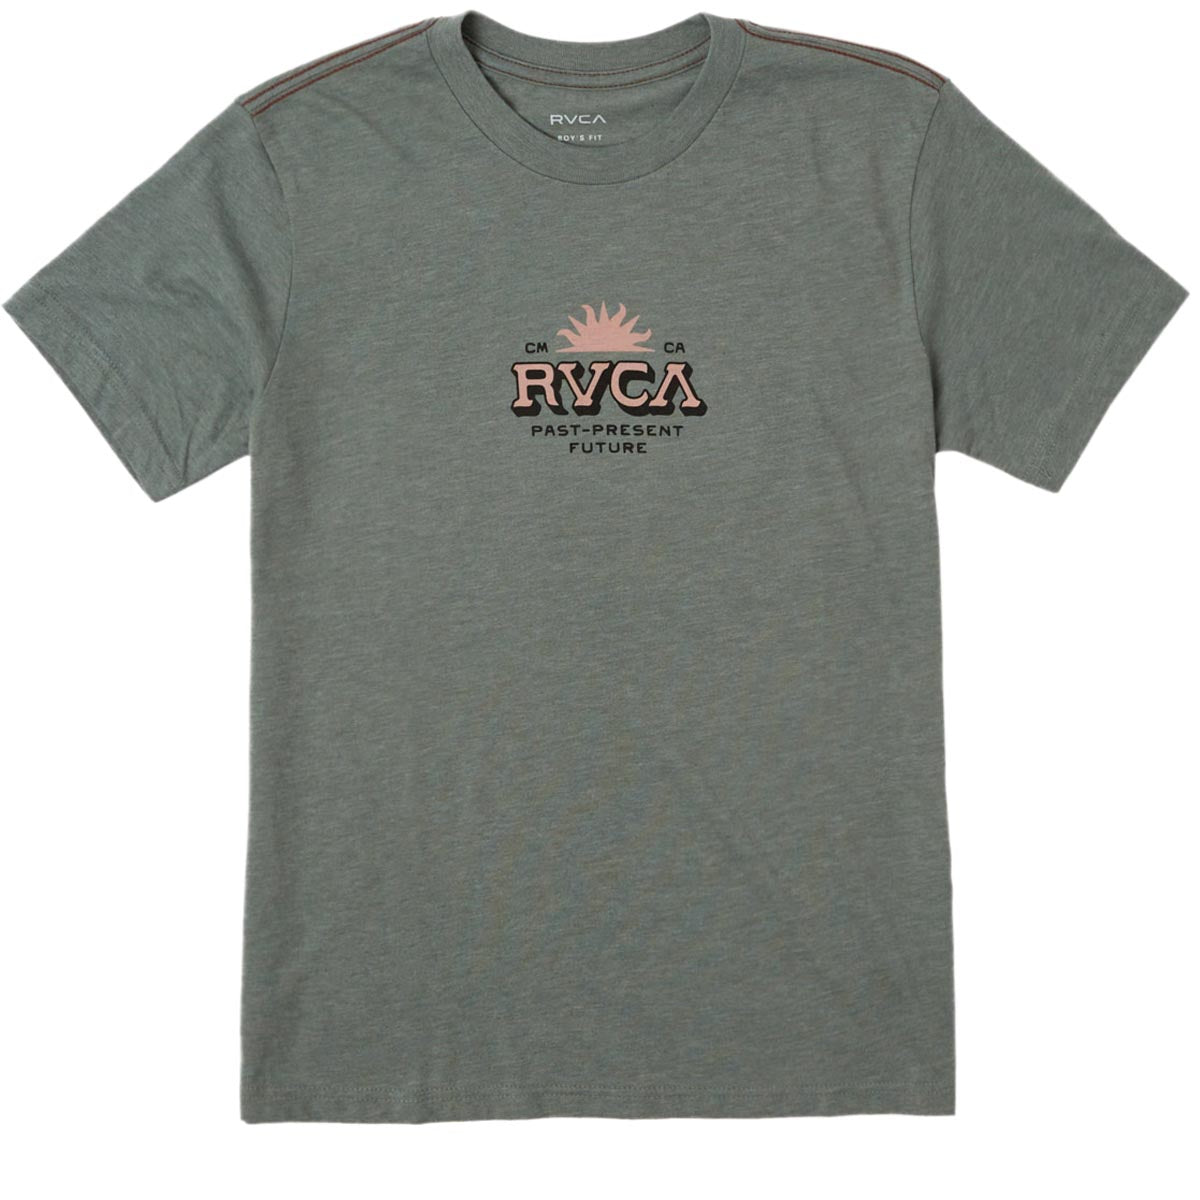 RVCA Type Set T-Shirt - Jade image 1